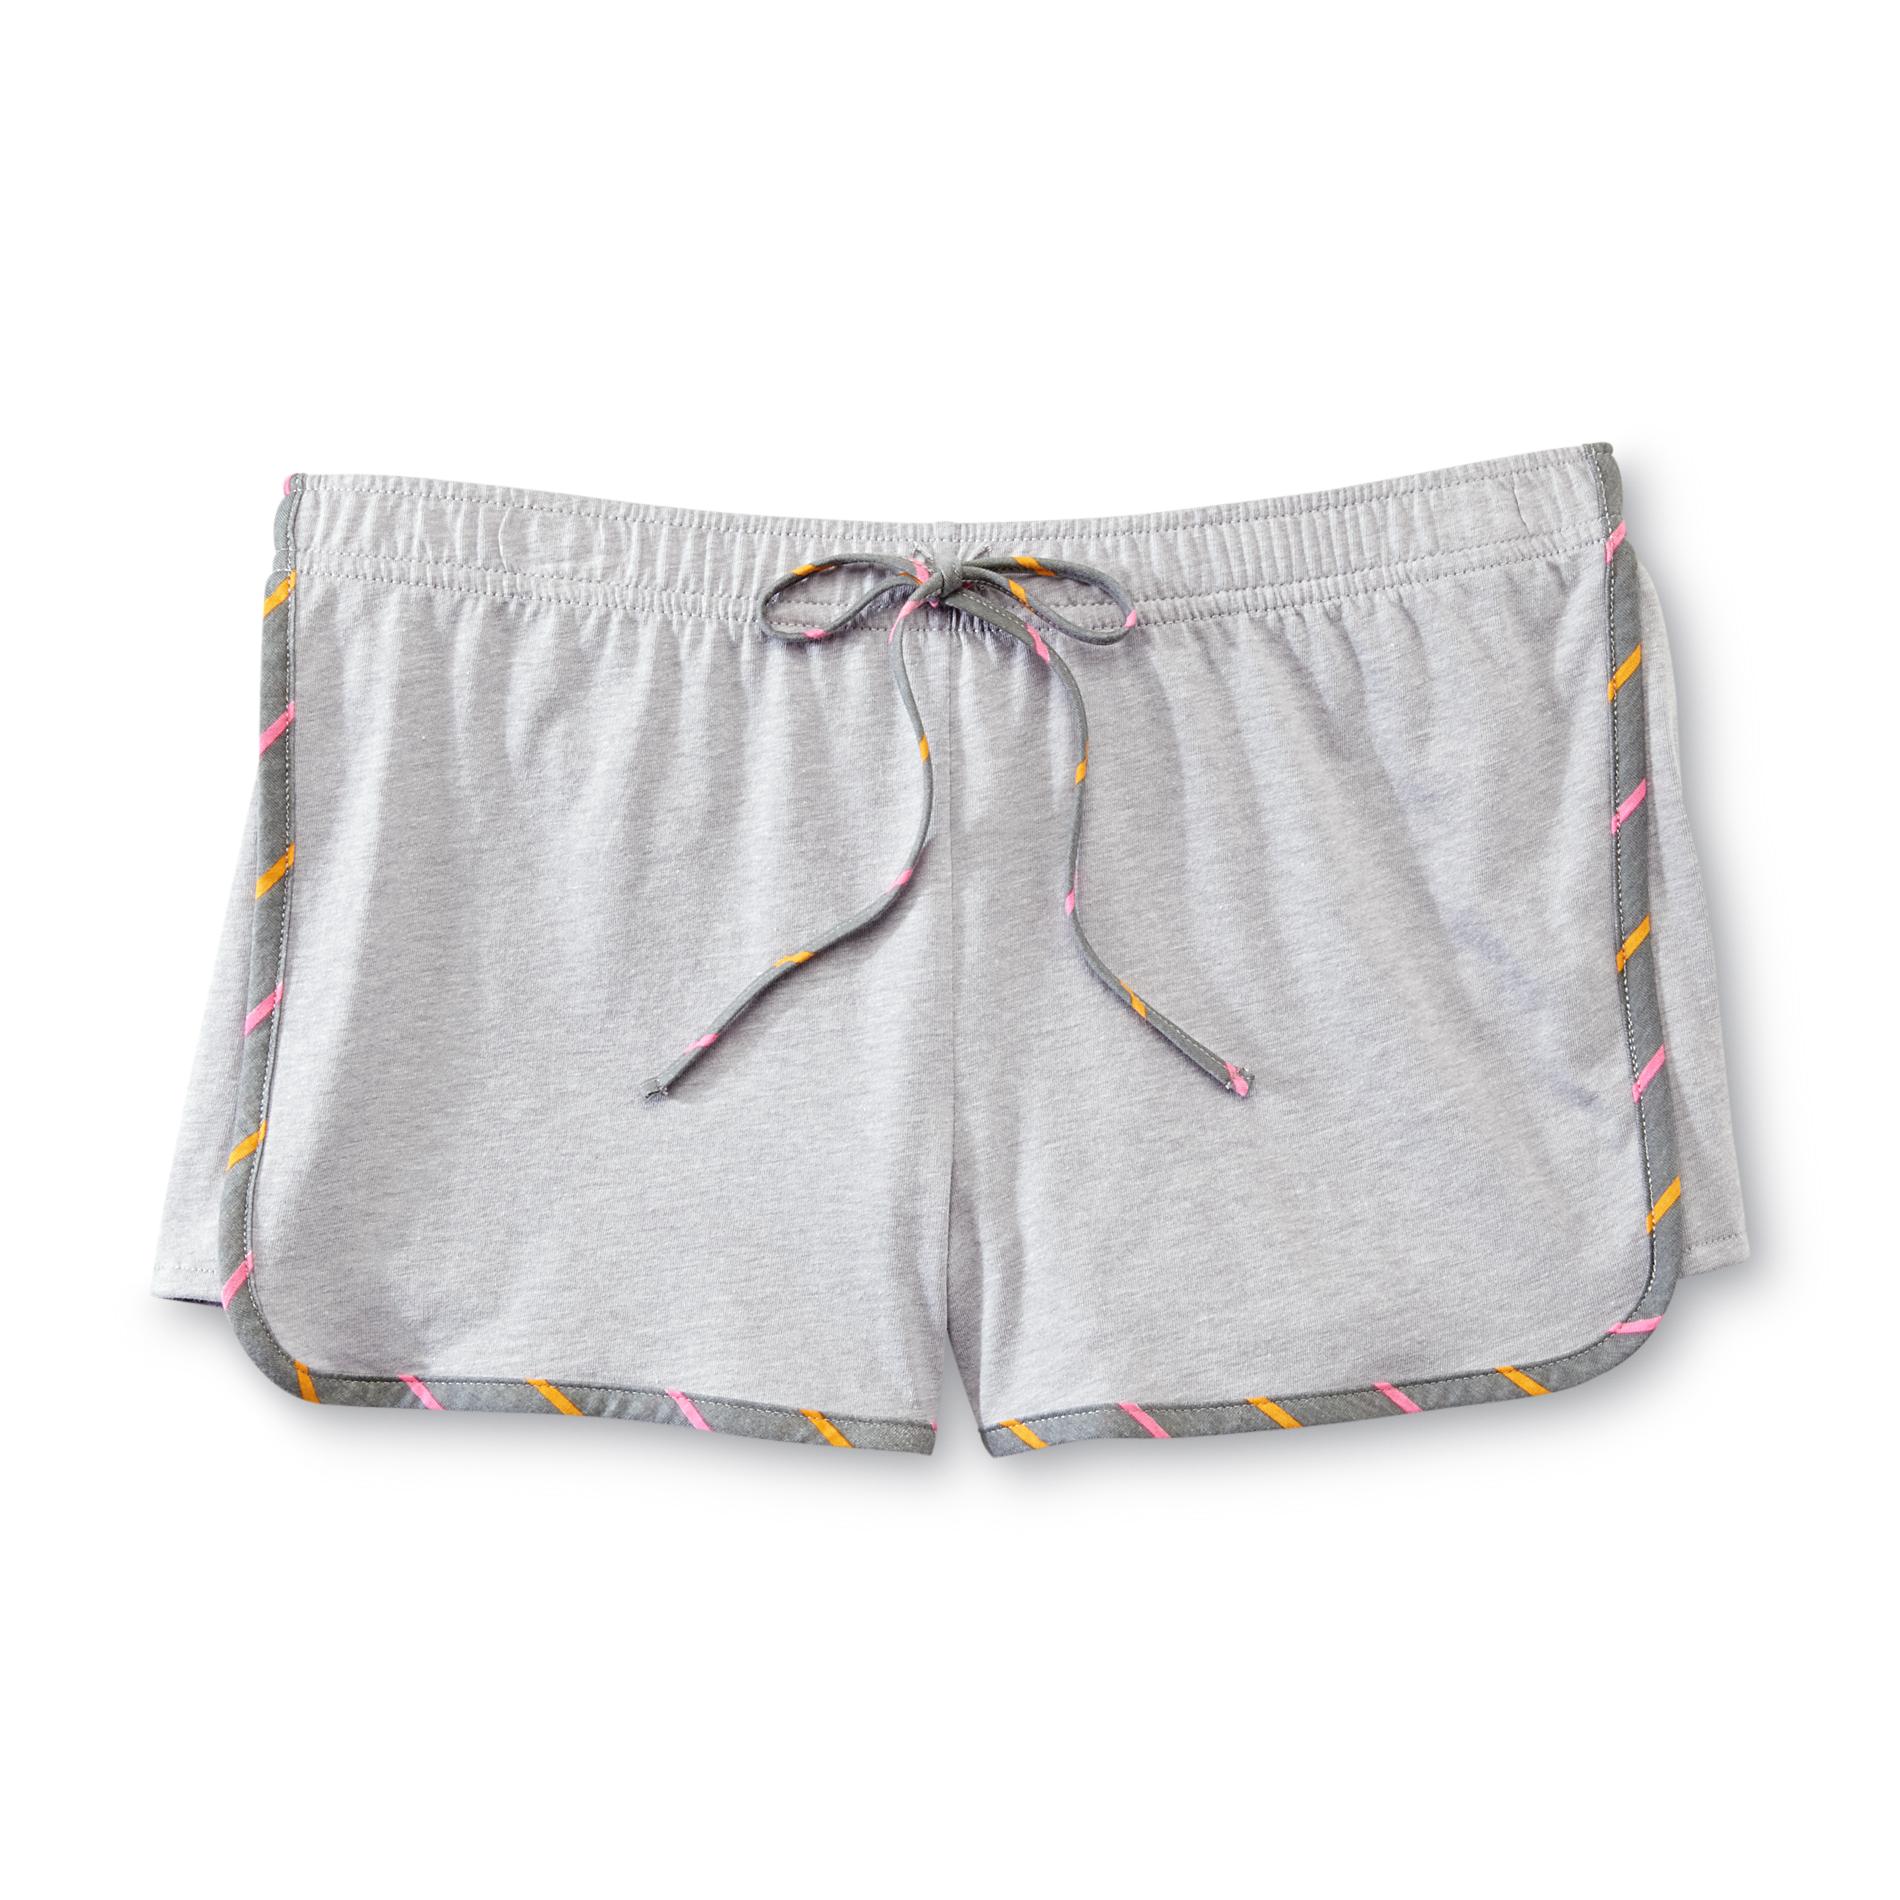 Joe Boxer Junior's Knit Dolphin Shorts - Striped Trim